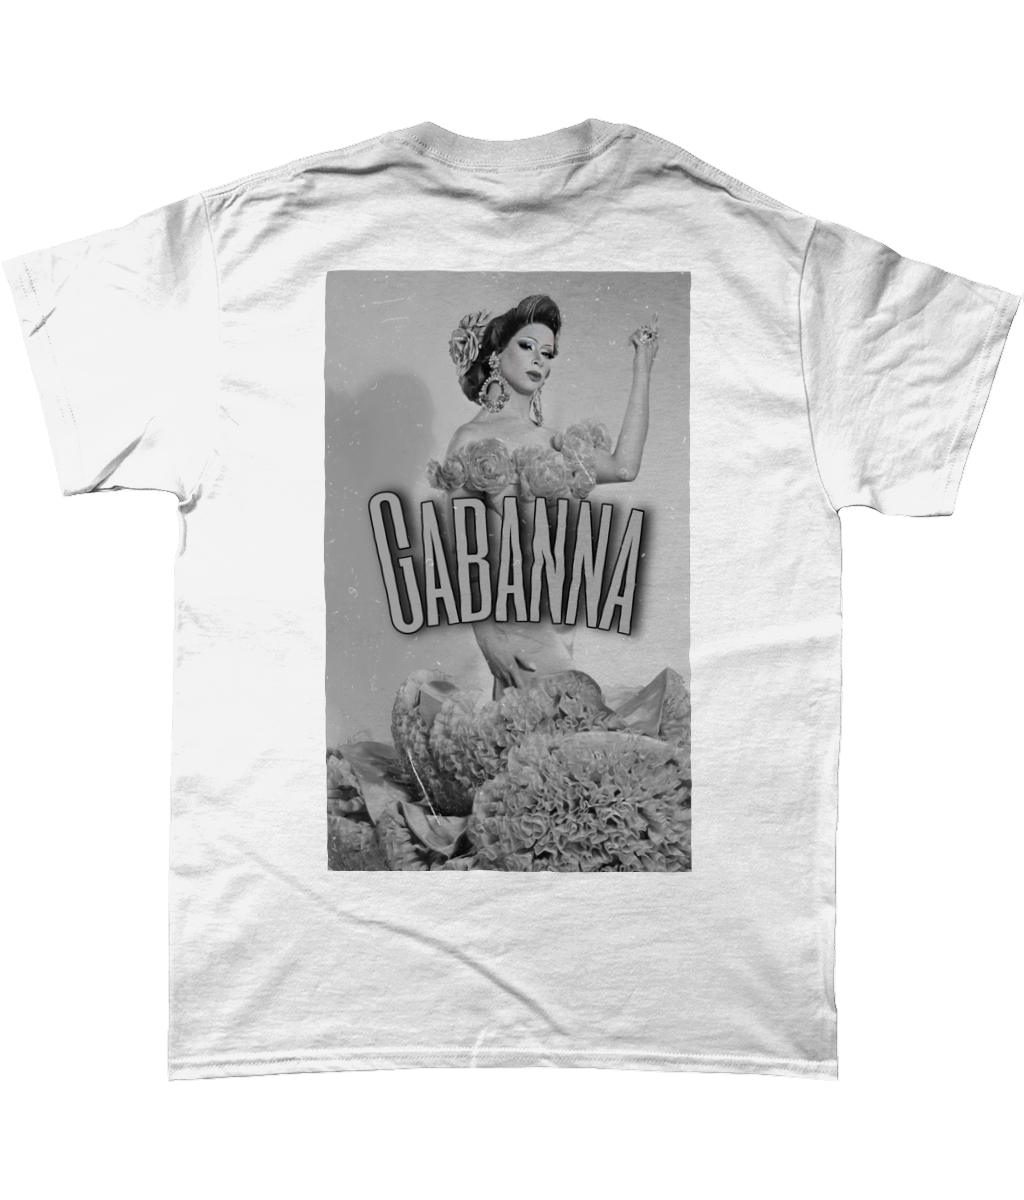 Gabanna - T-shirt